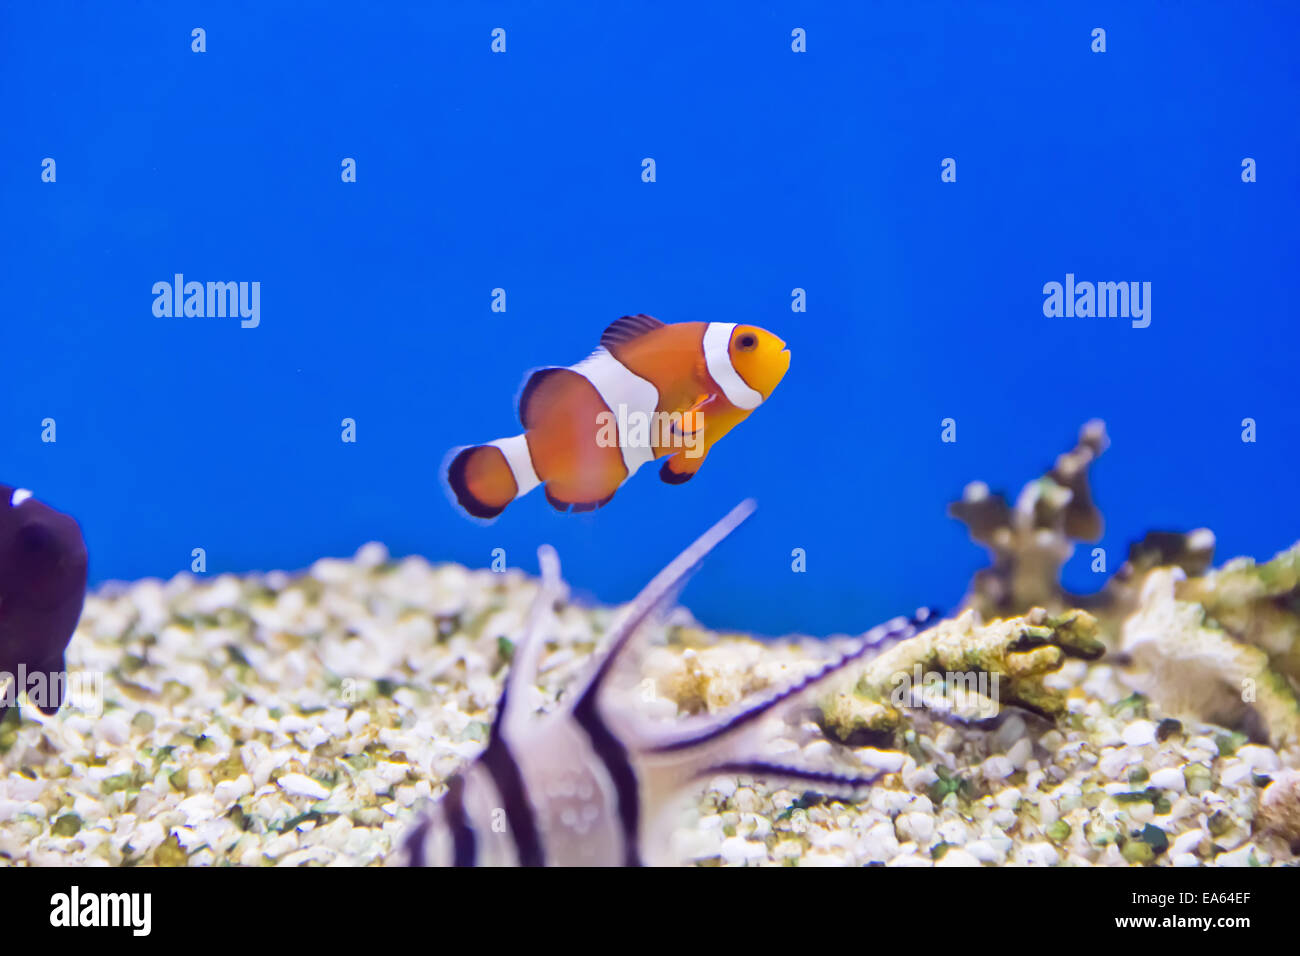 Clown fish Stock Photo